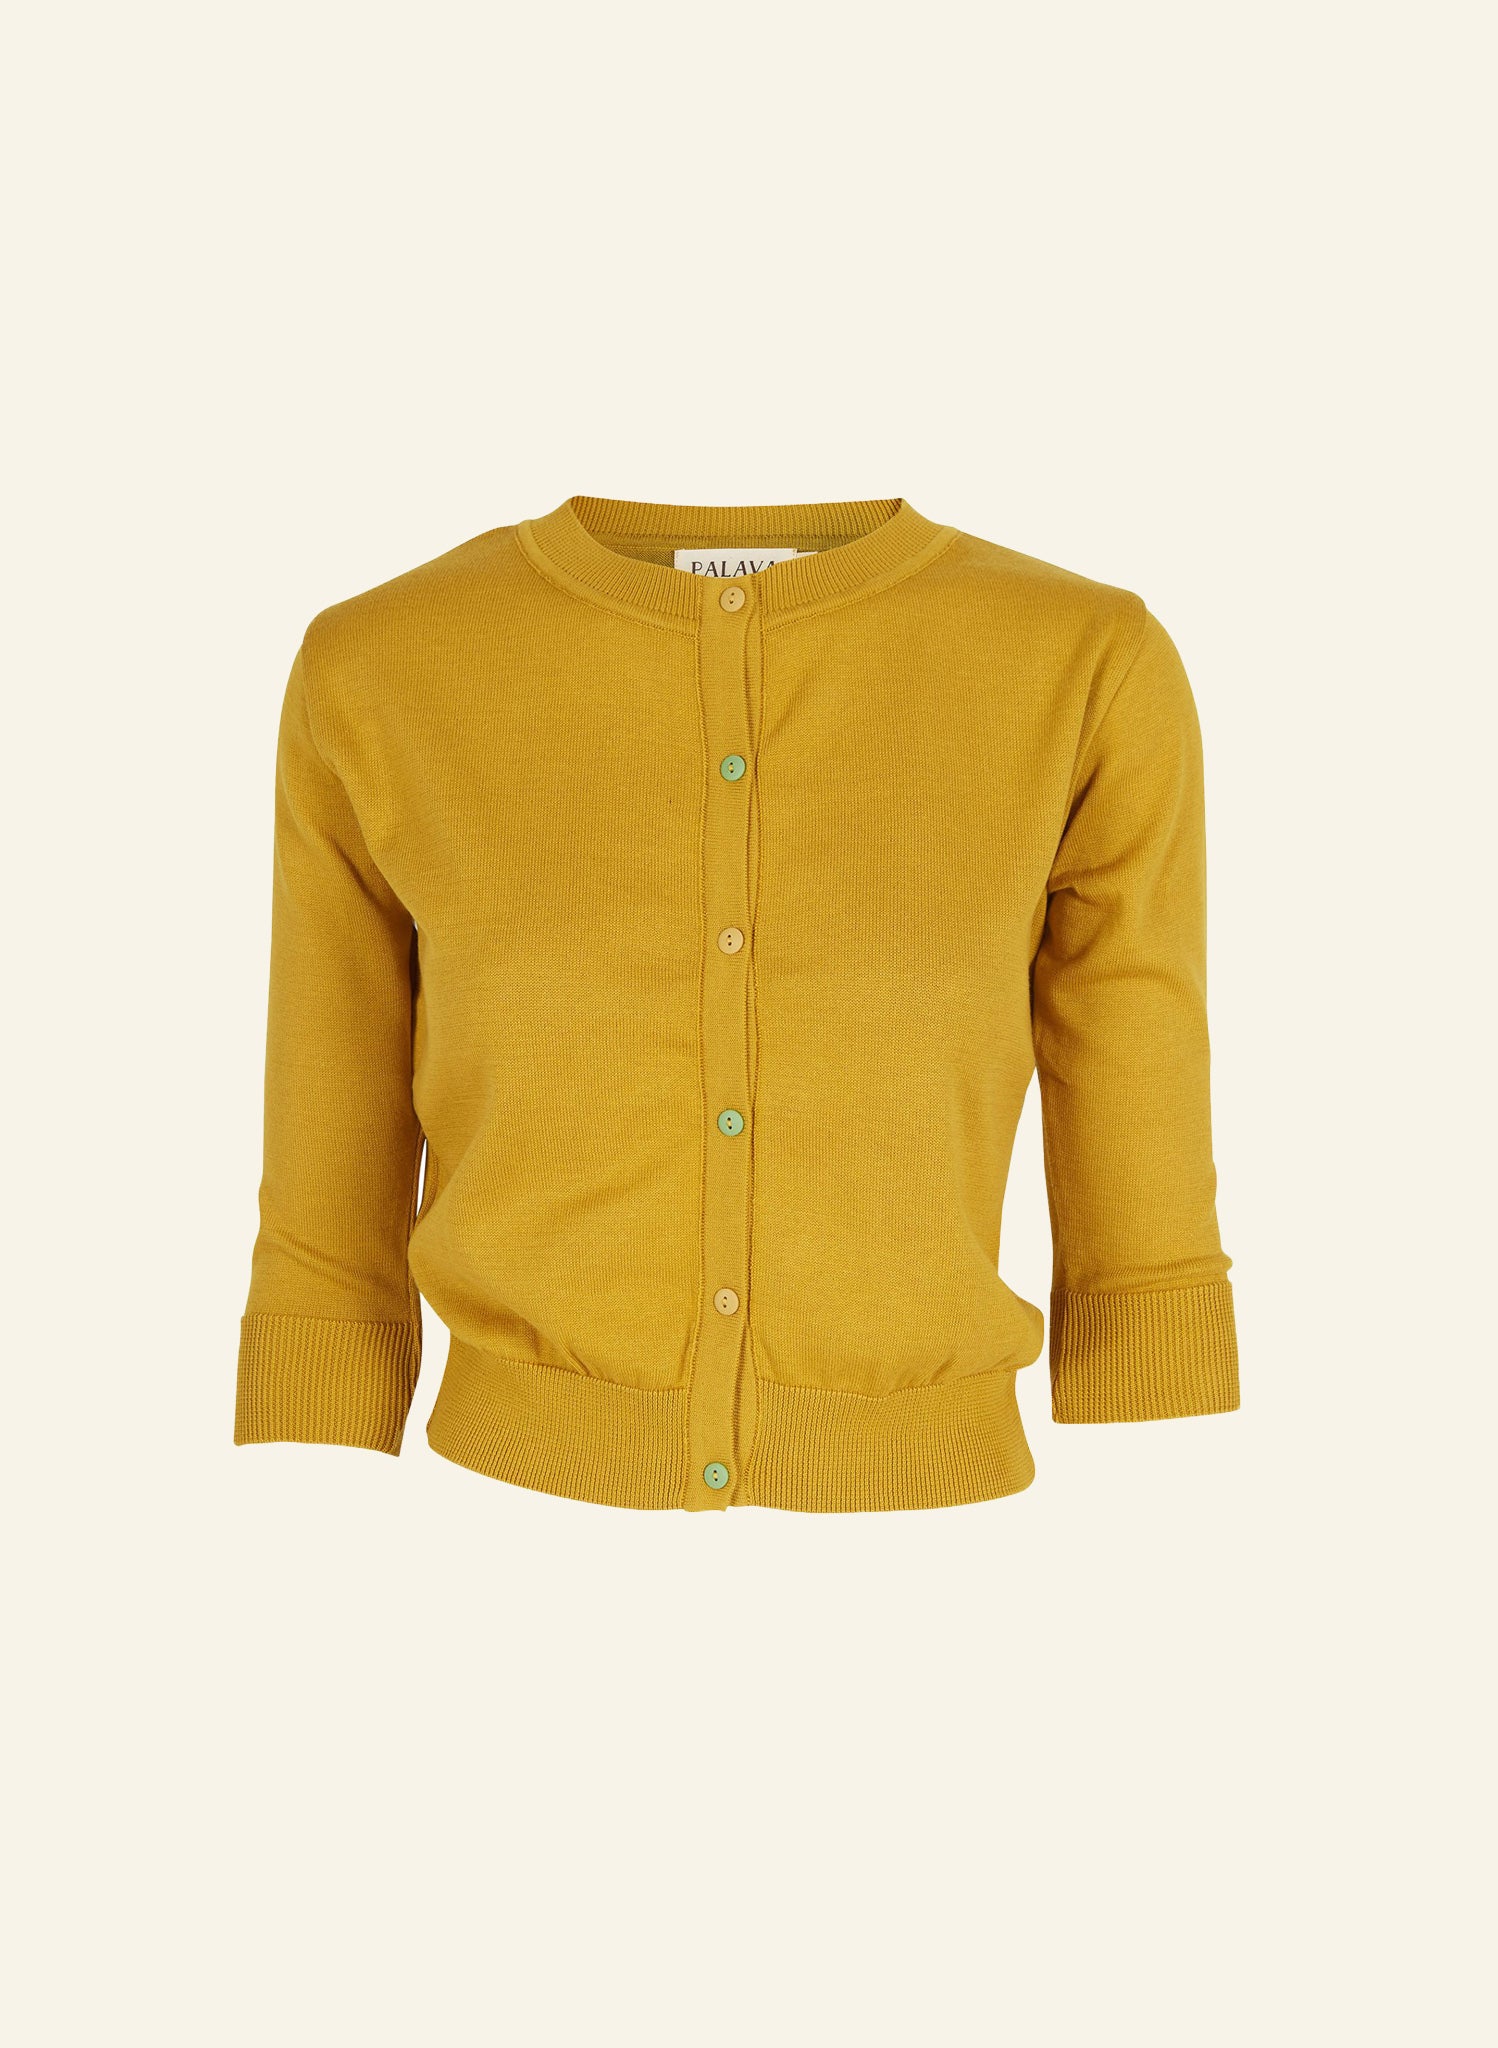 Vera Cardigan - Mustard Yellow Cotton